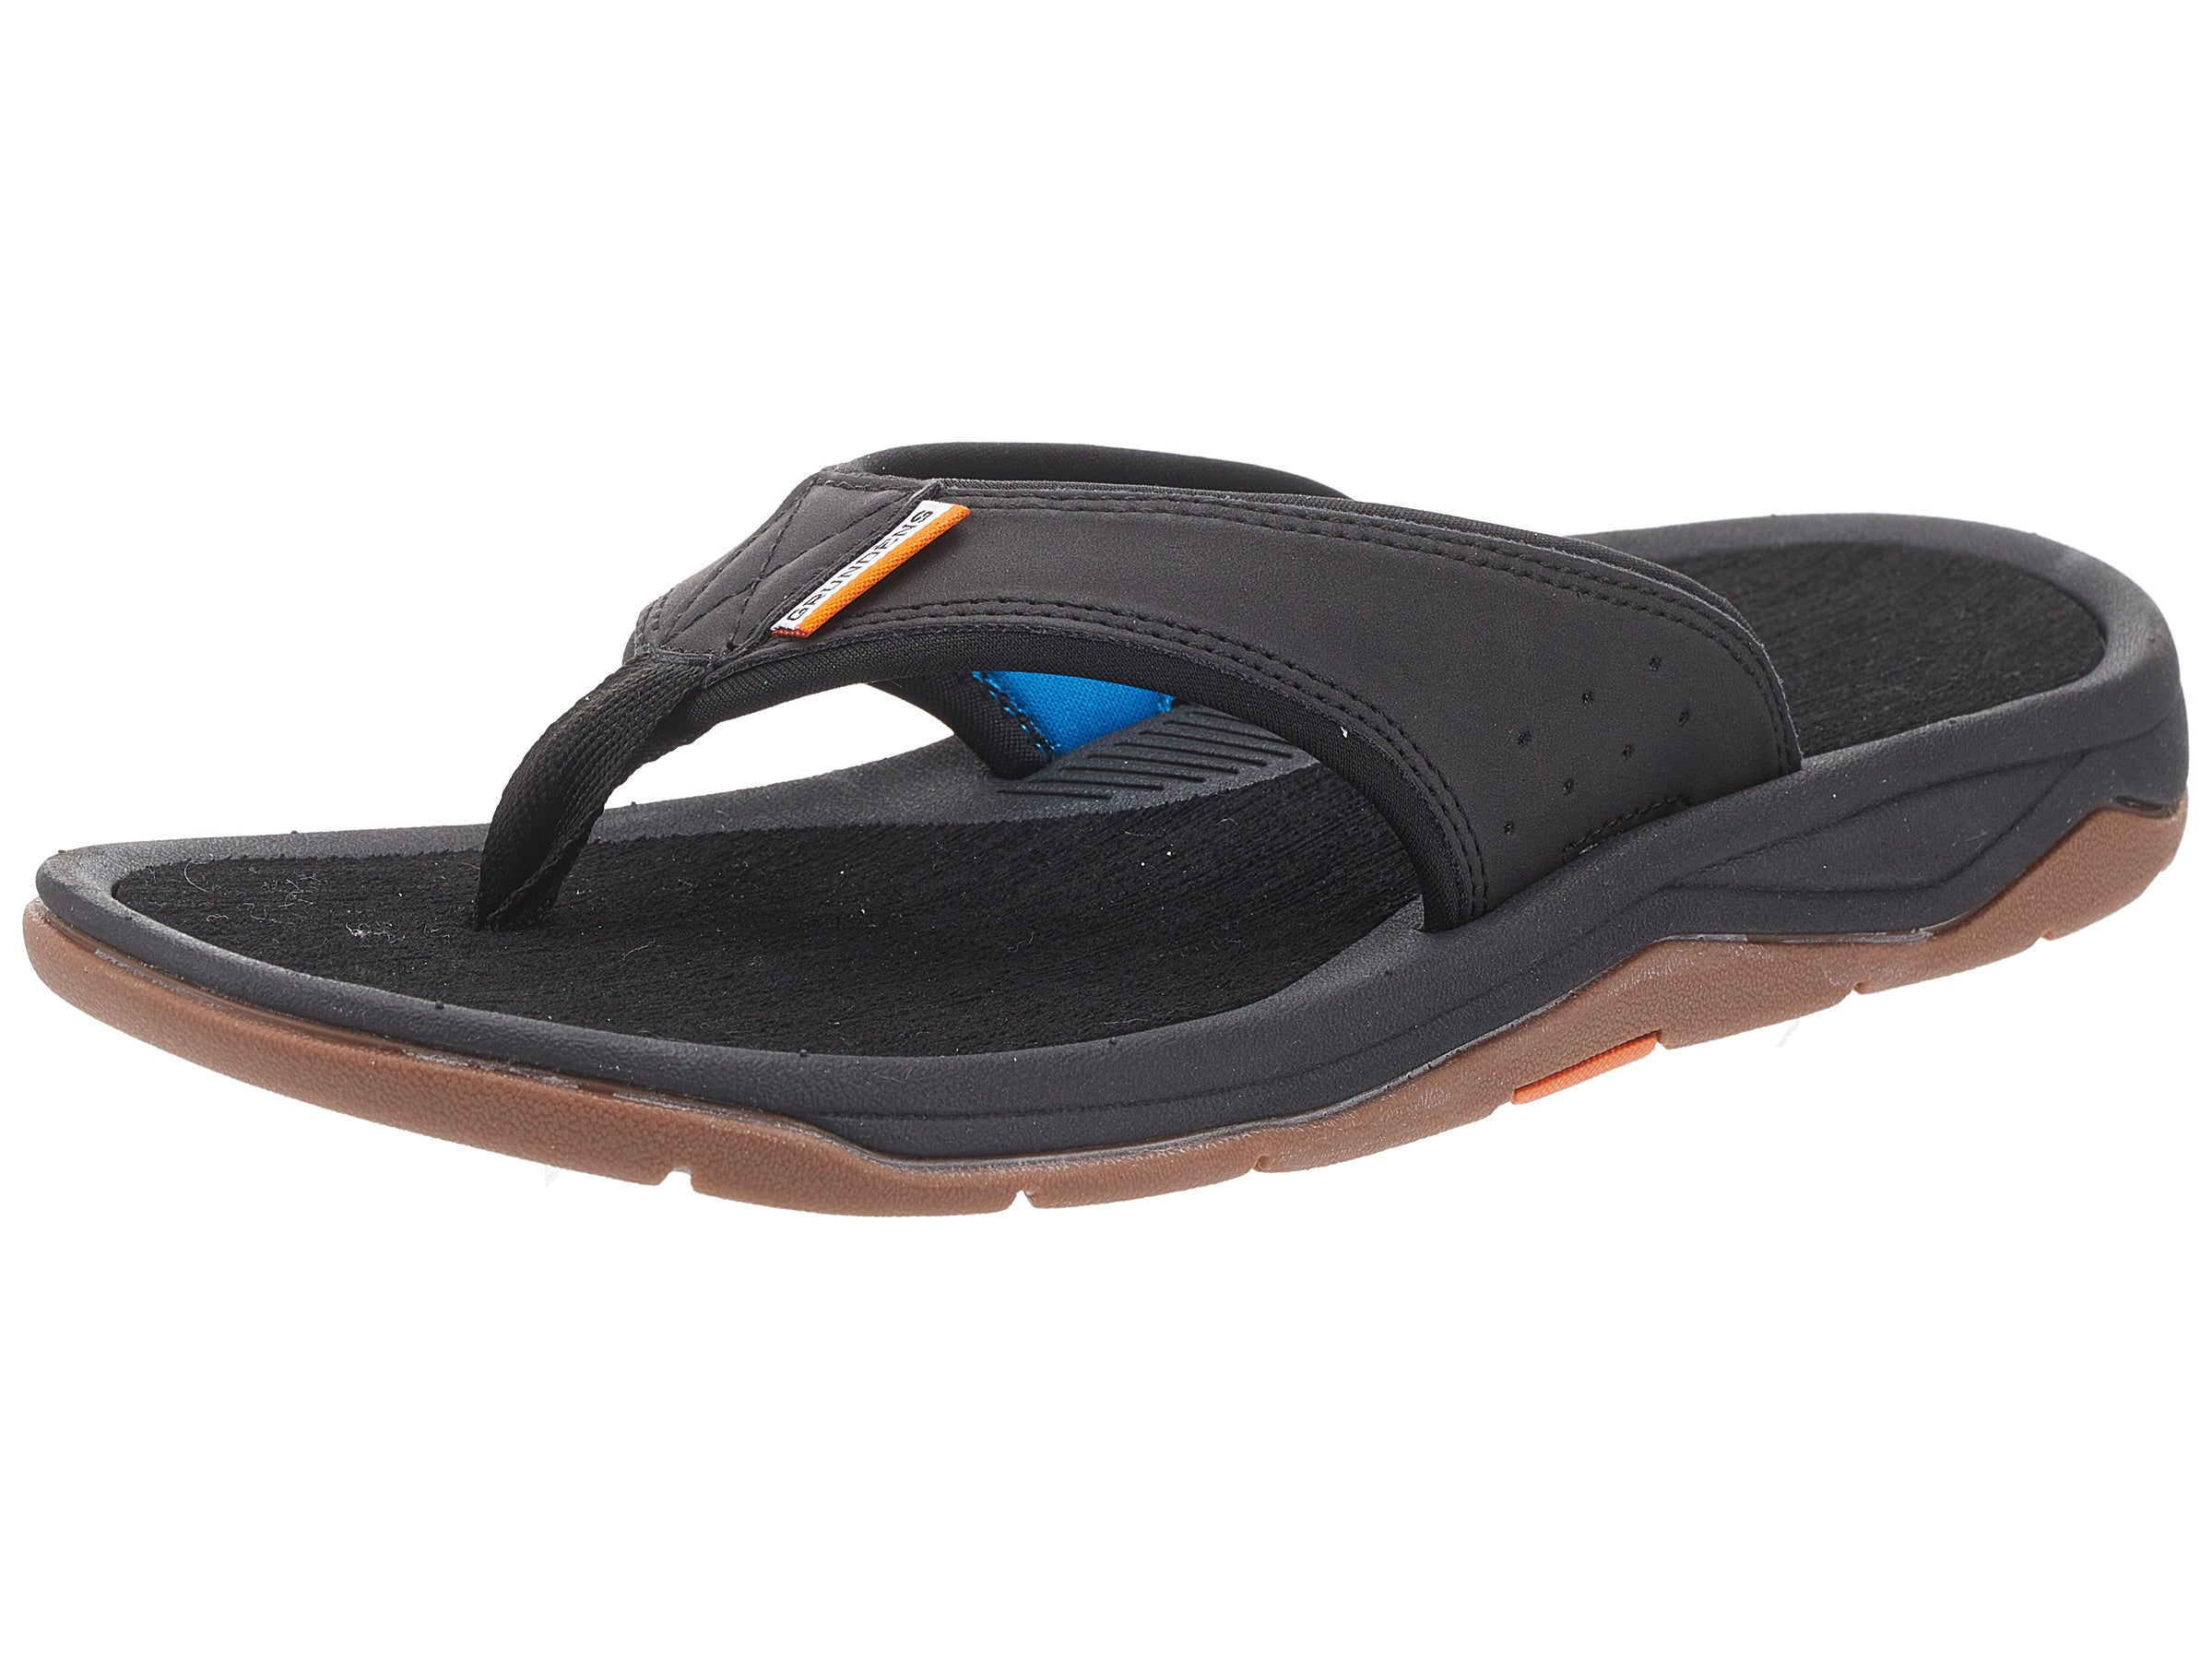 Grundens Deck Boss SeaDek Fishing Sandals Flip Flop Black New All Sizes 